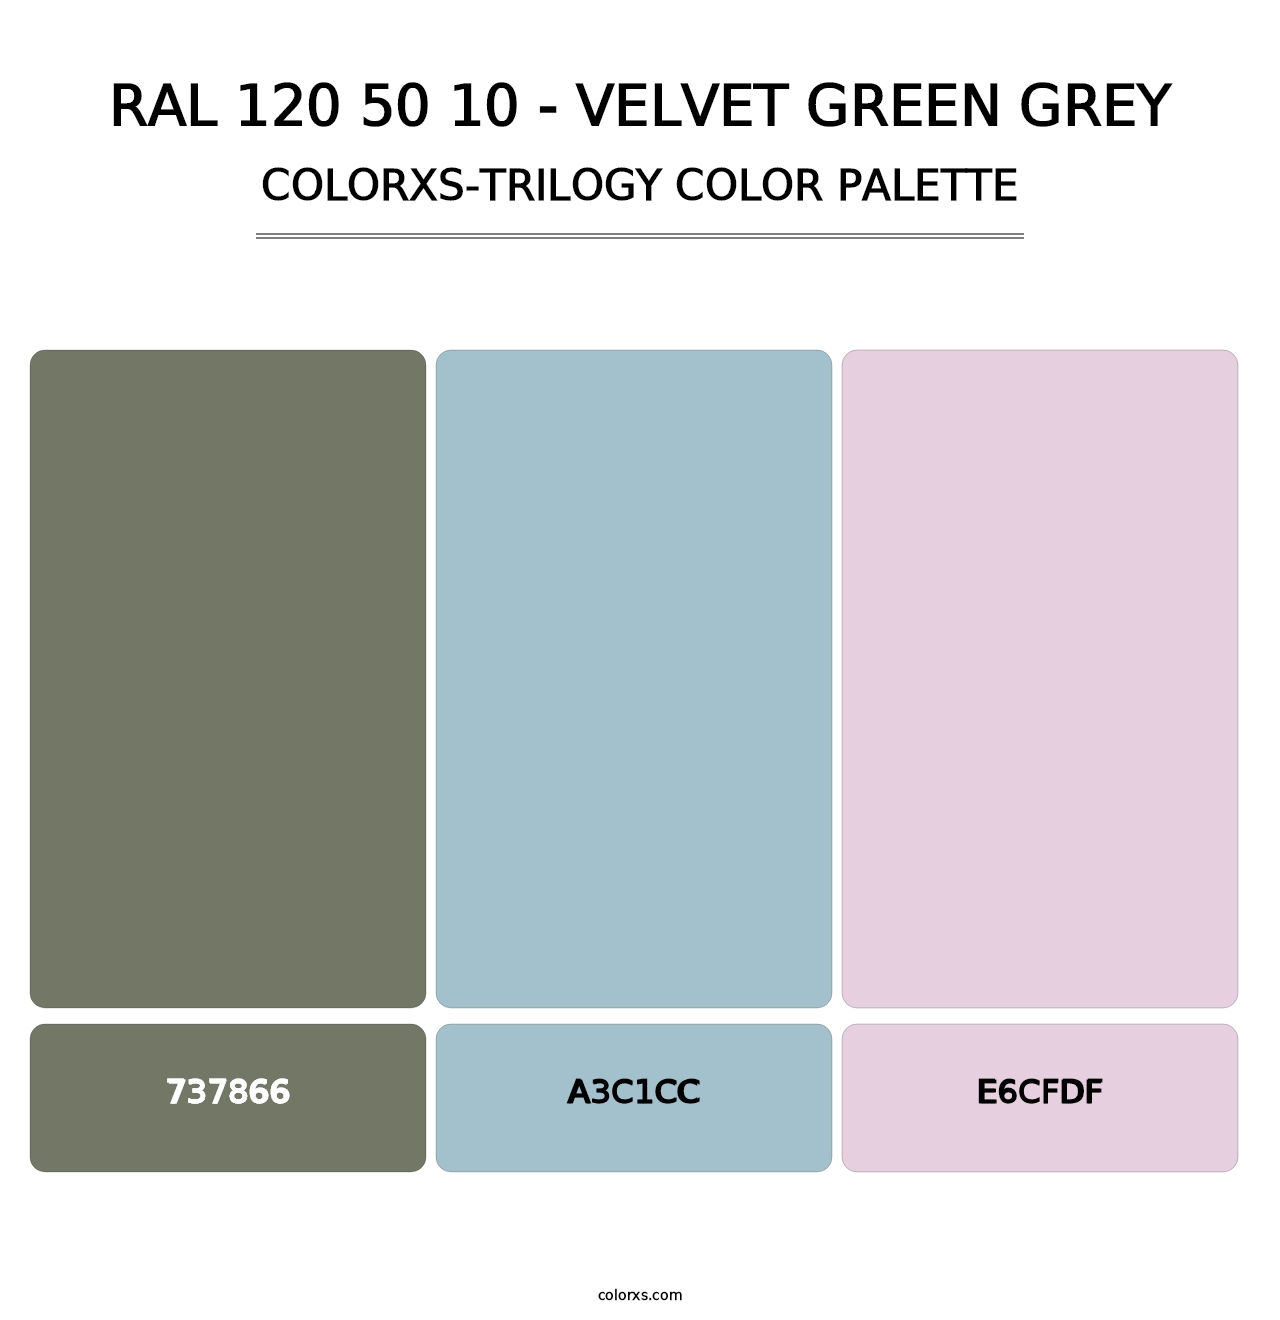 RAL 120 50 10 - Velvet Green Grey - Colorxs Trilogy Palette